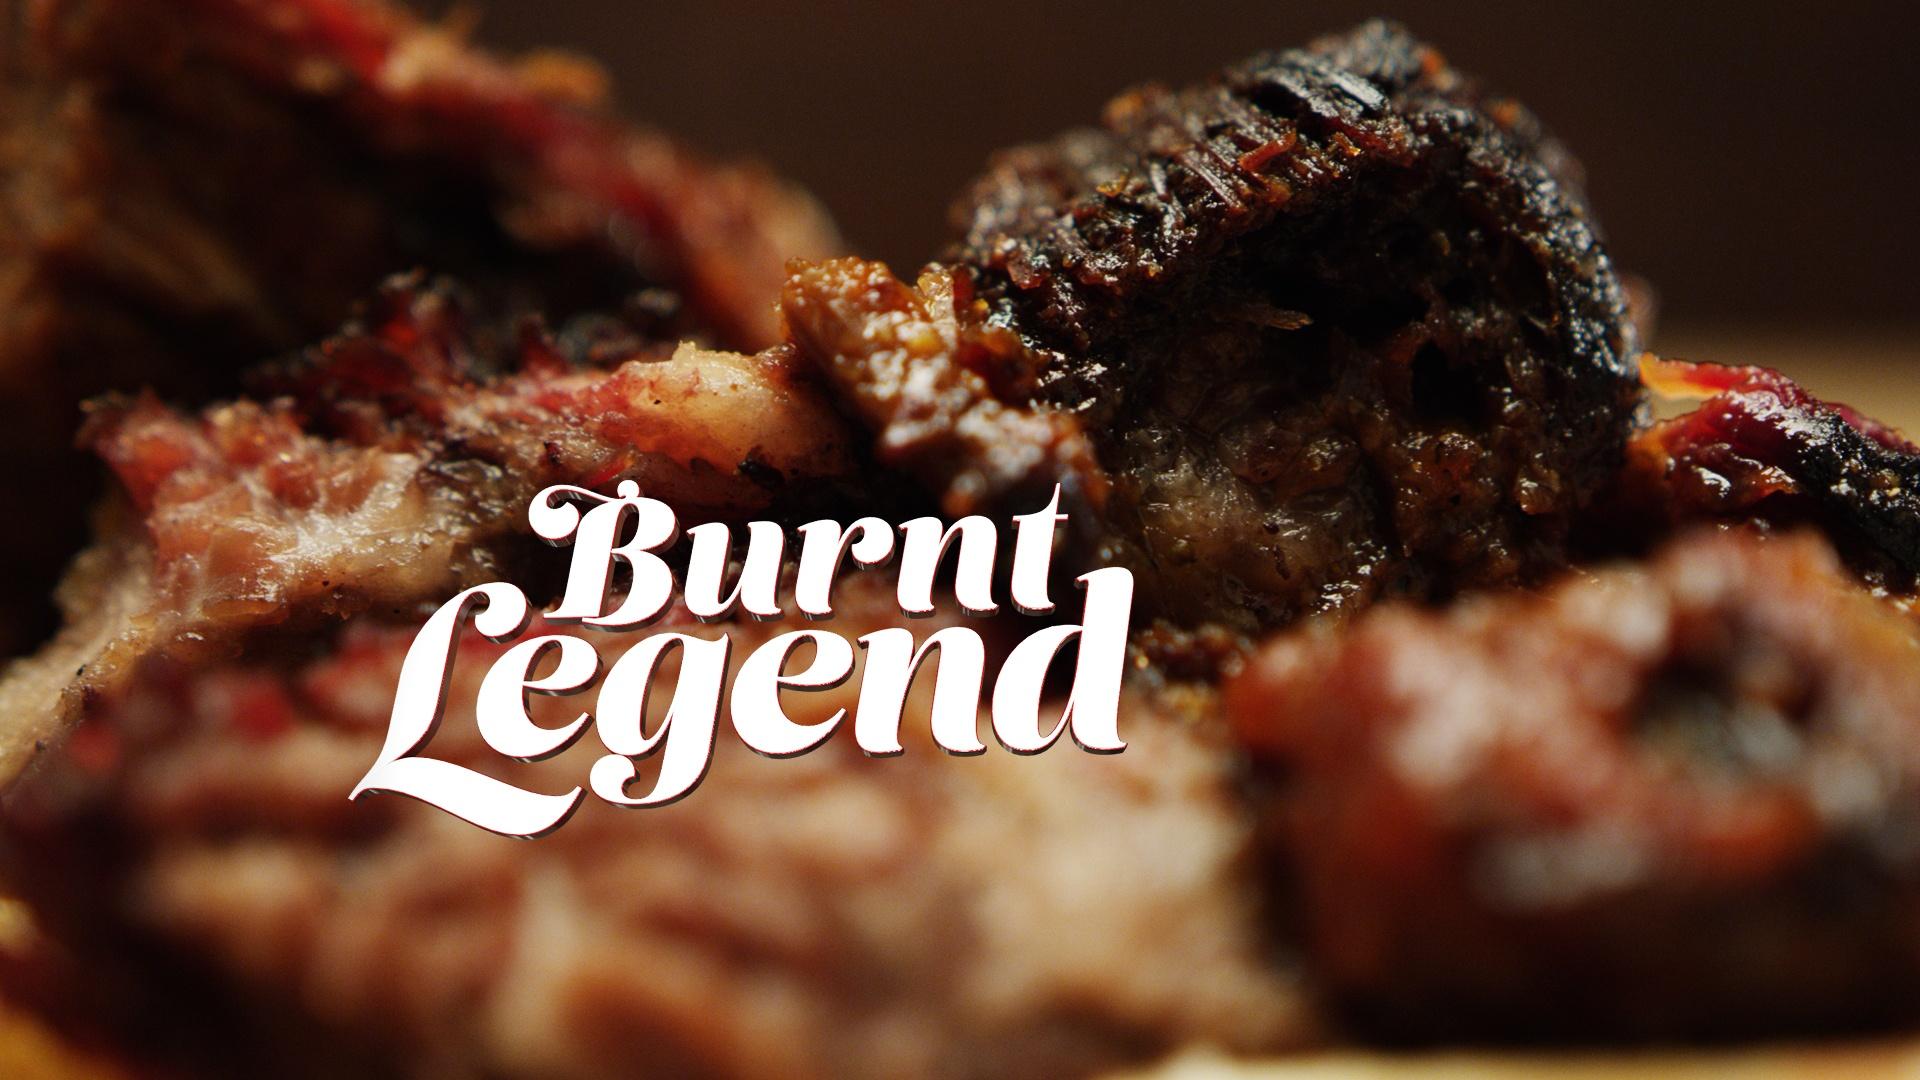 Burnt Legend: The Story of Burnt Ends